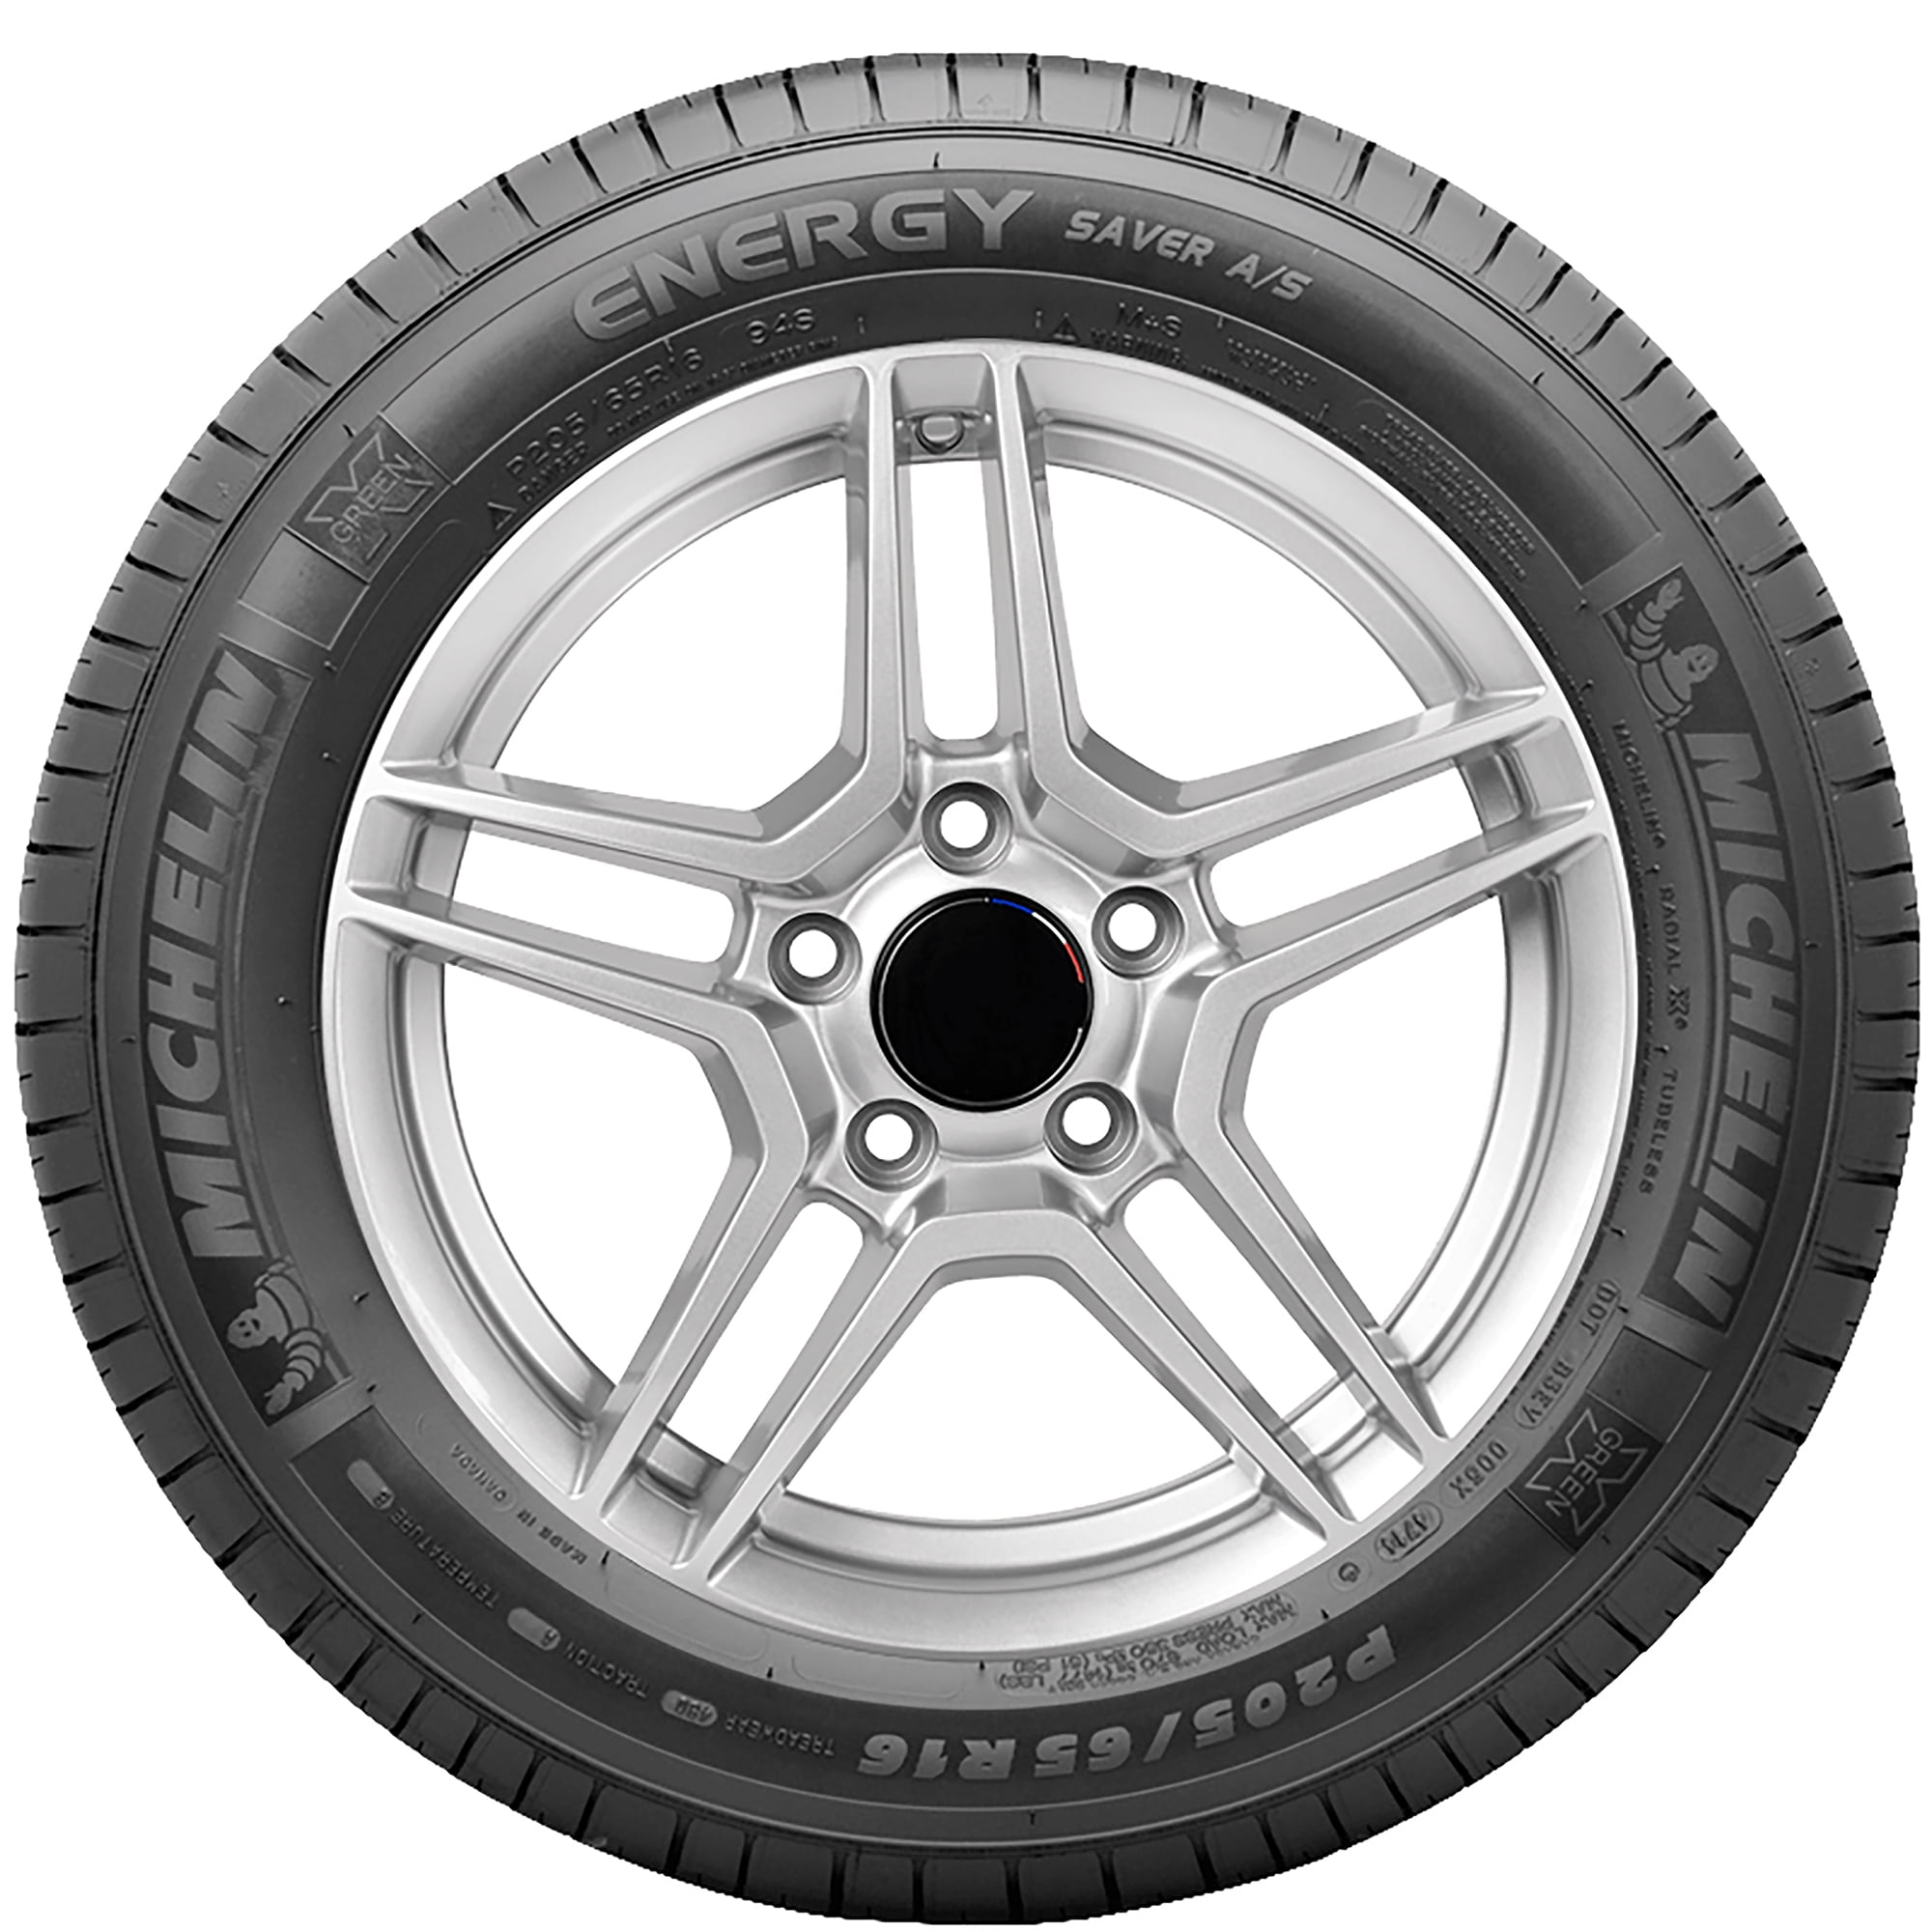 Energy Season Tire 215/50-17 Saver Michelin H 91 All